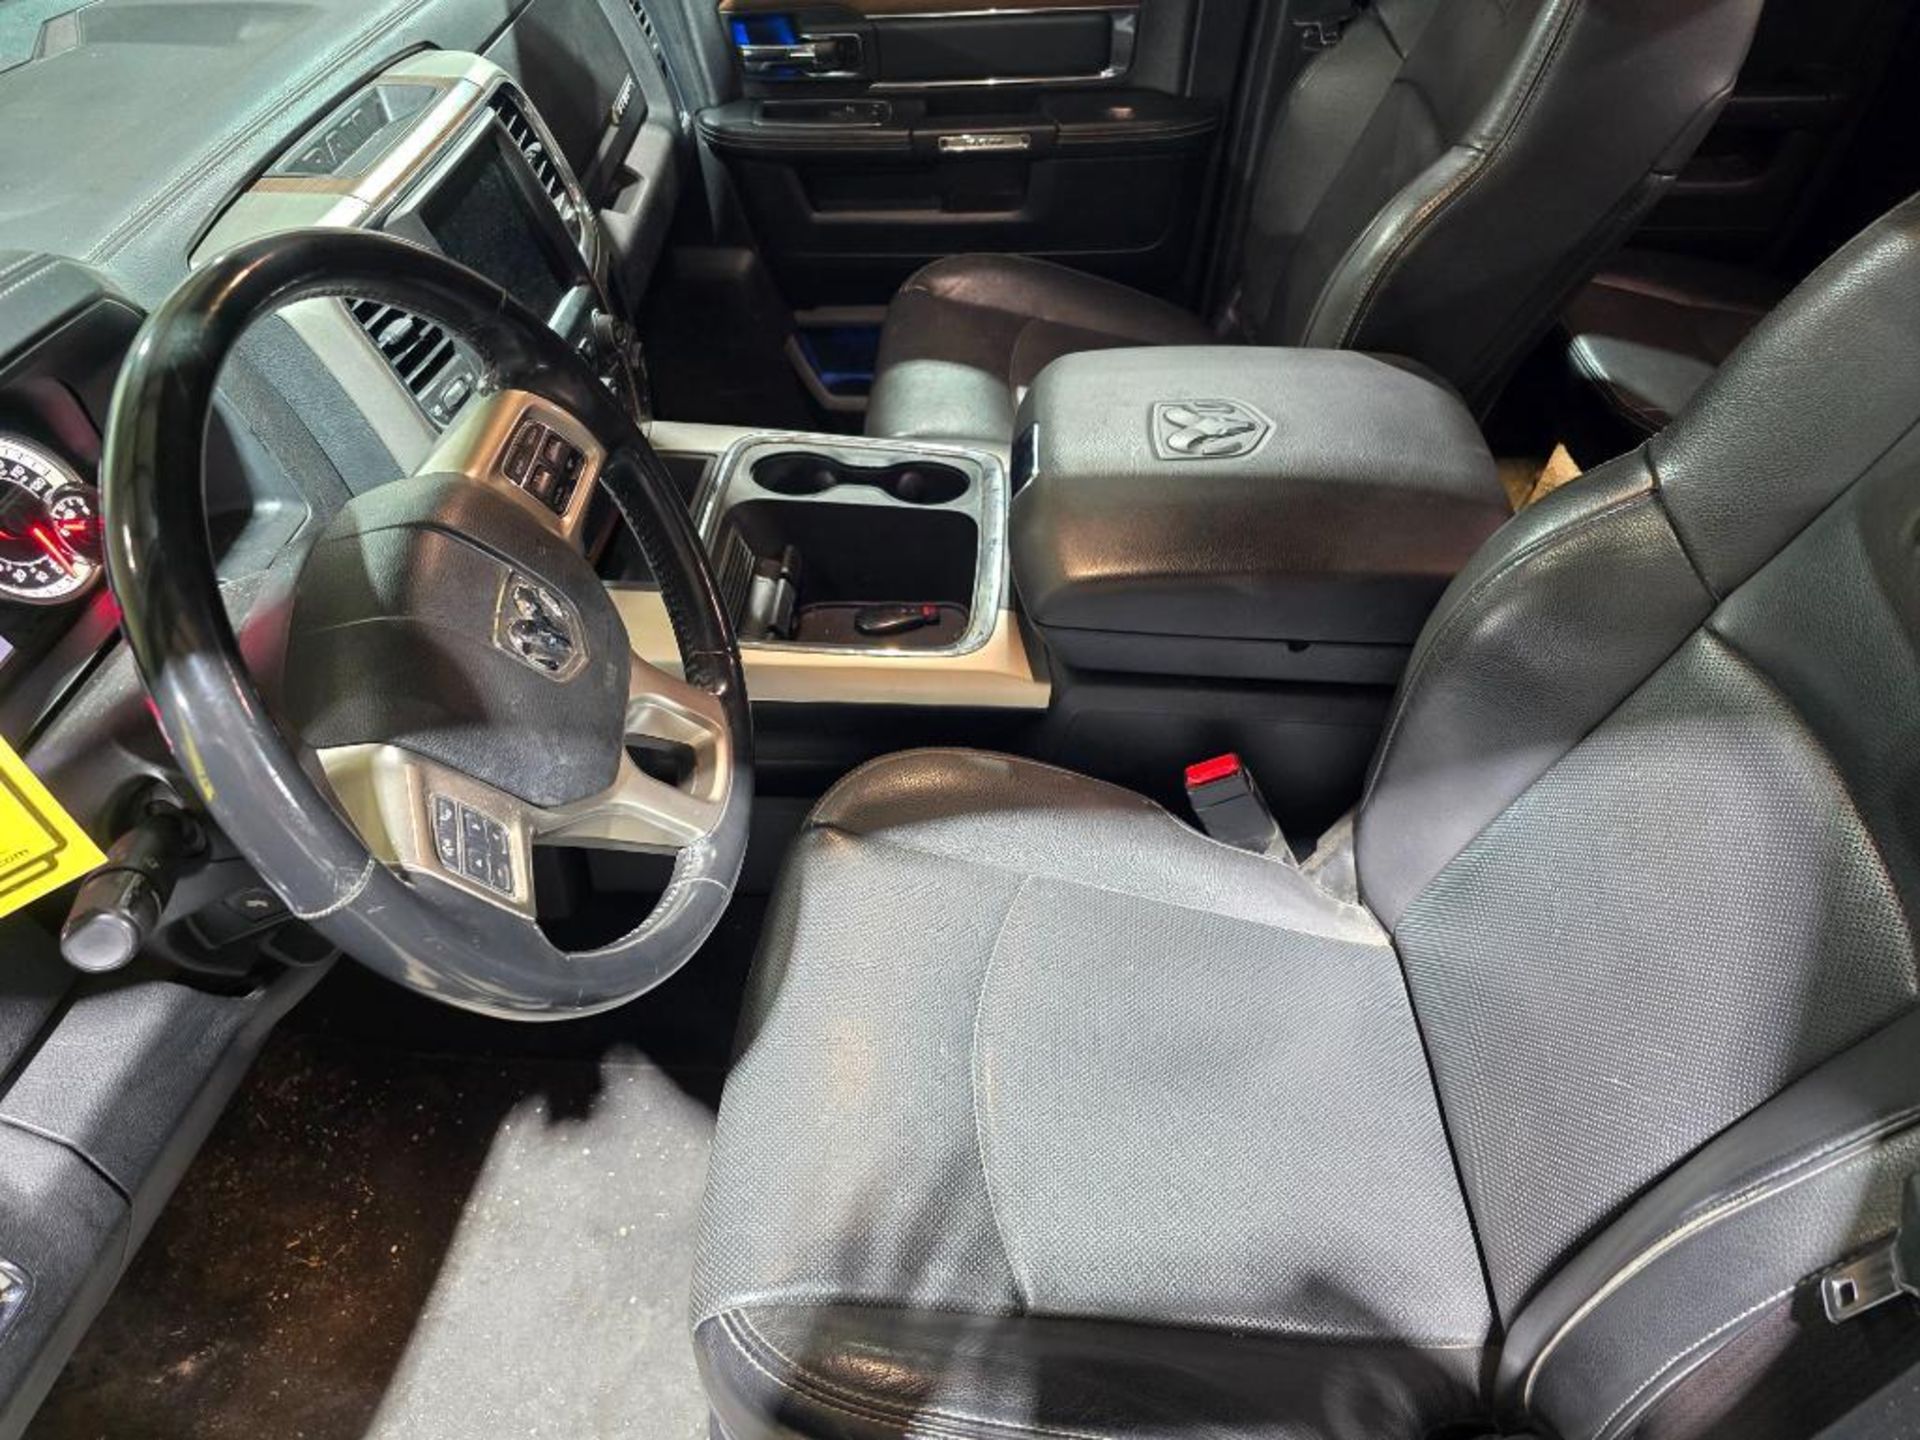 2016 Dodge Ram 1500 Truck, Crew Cab, Leather Interior, Power Seats/Windows, 6,800 GVWR, Running Boar - Image 16 of 18